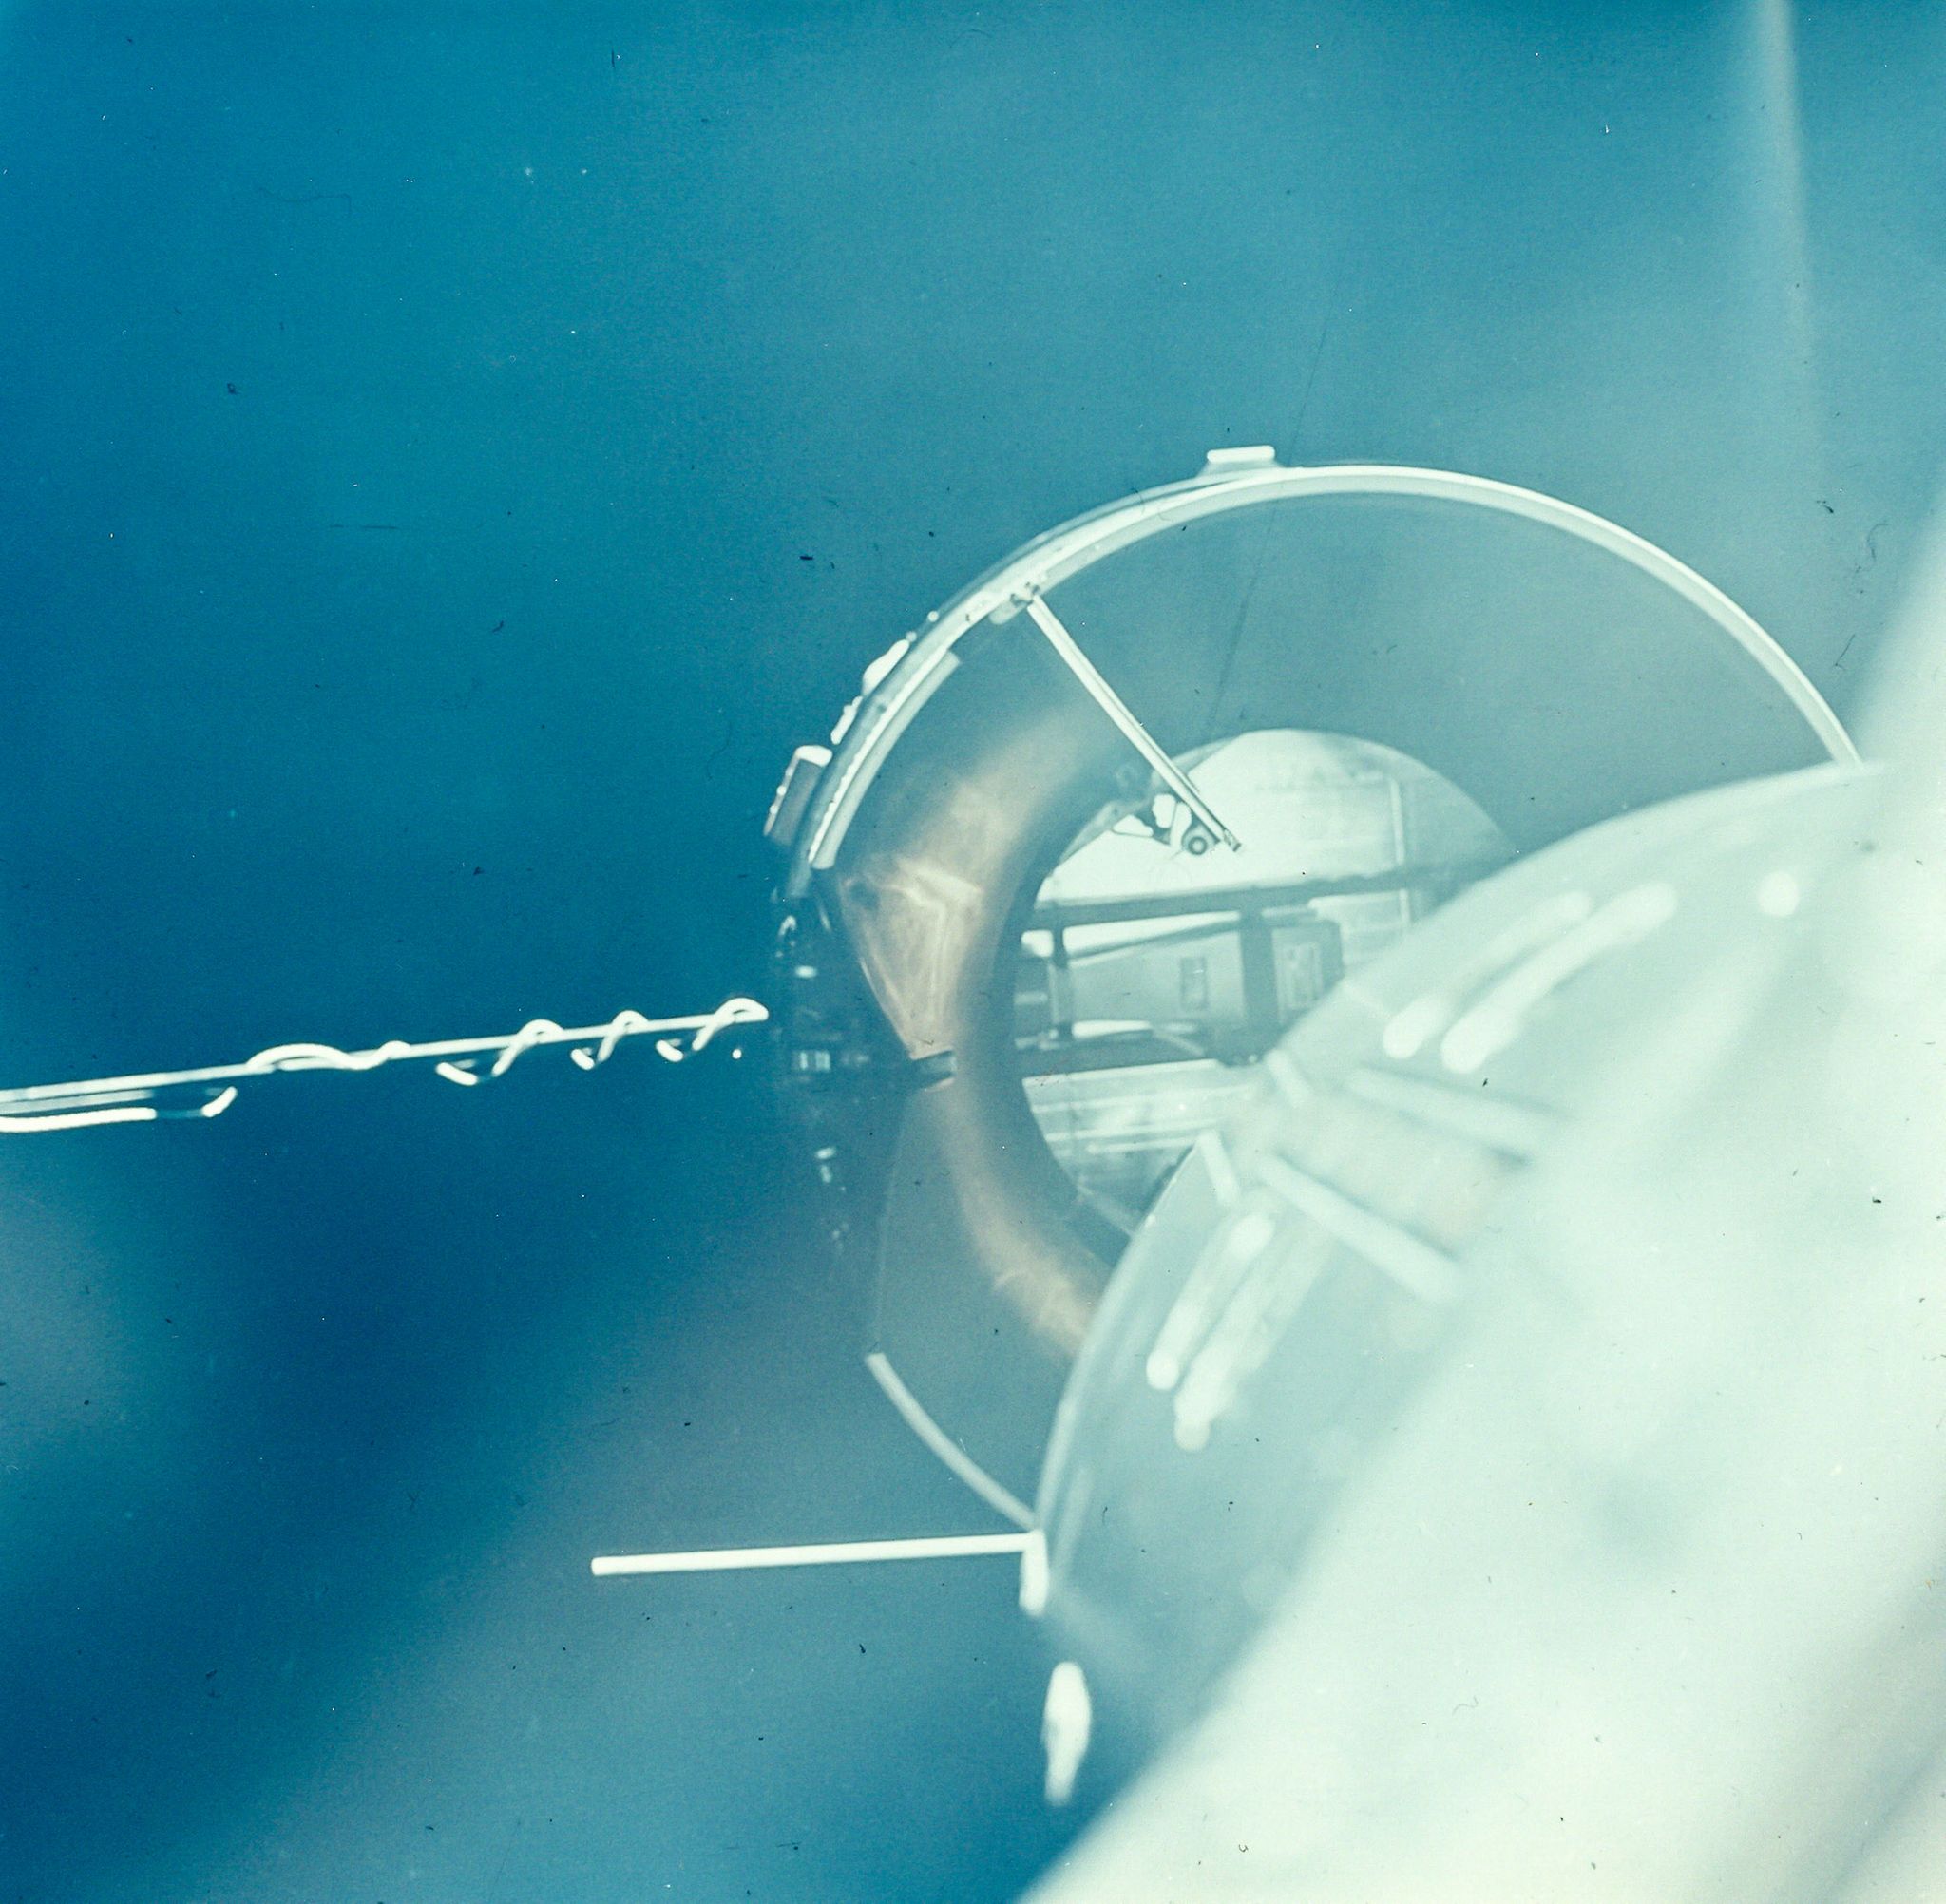 David Scott - First docking of two spacecraft, Gemini 8, March 1966 Three vintage chromogenic prints